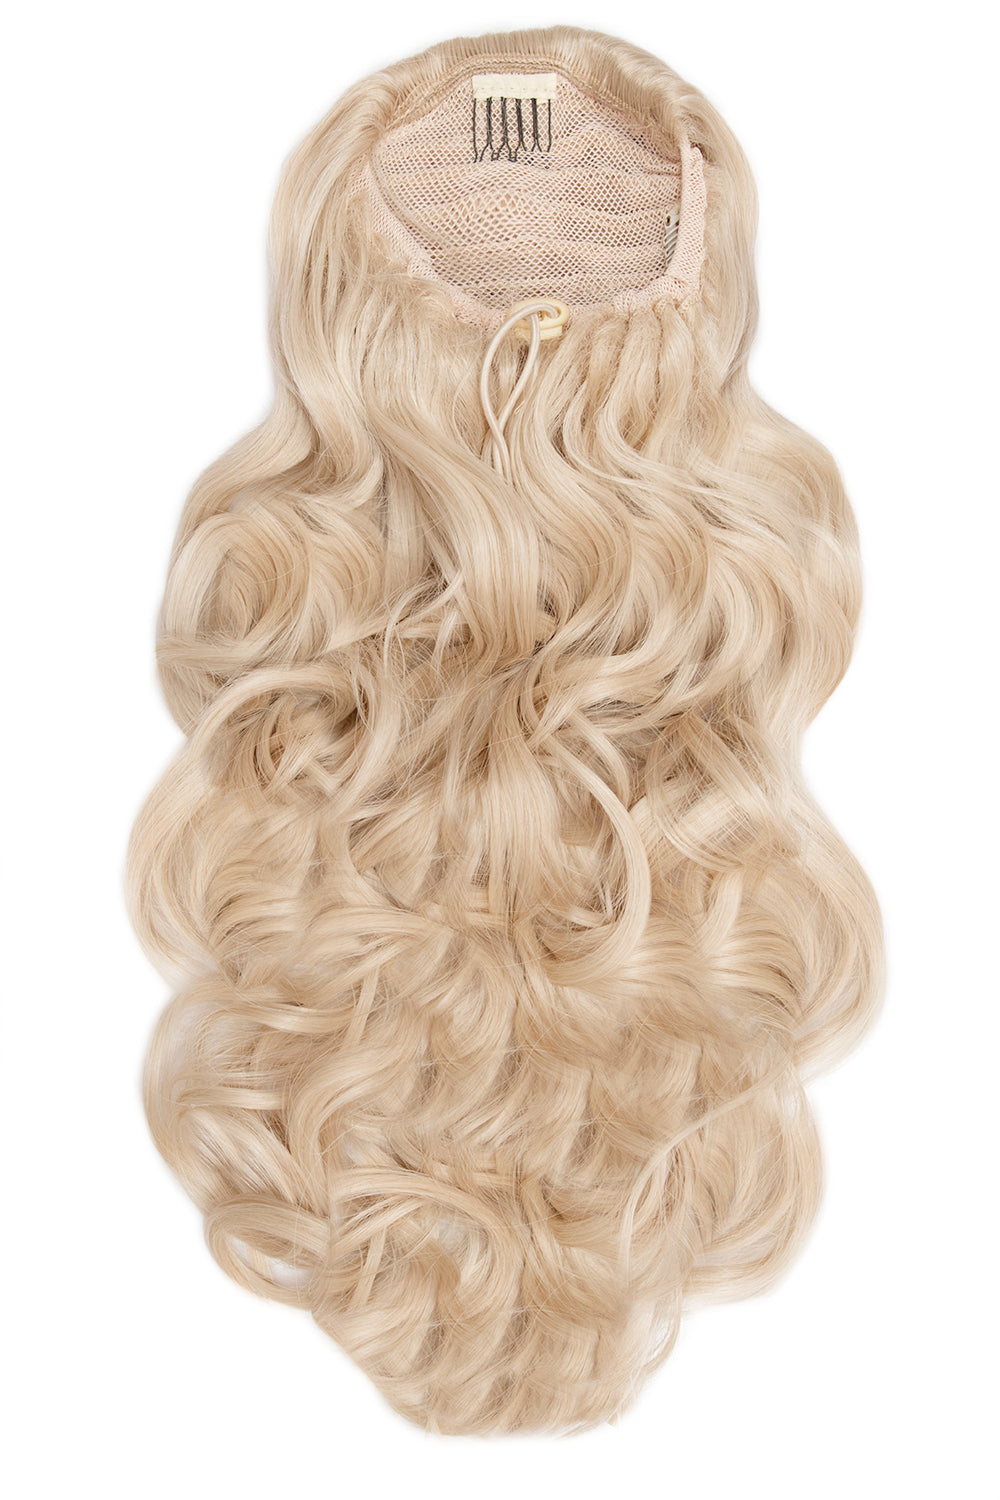 Curly Glam 22" Drawstring Ponytail - Light Golden Blonde